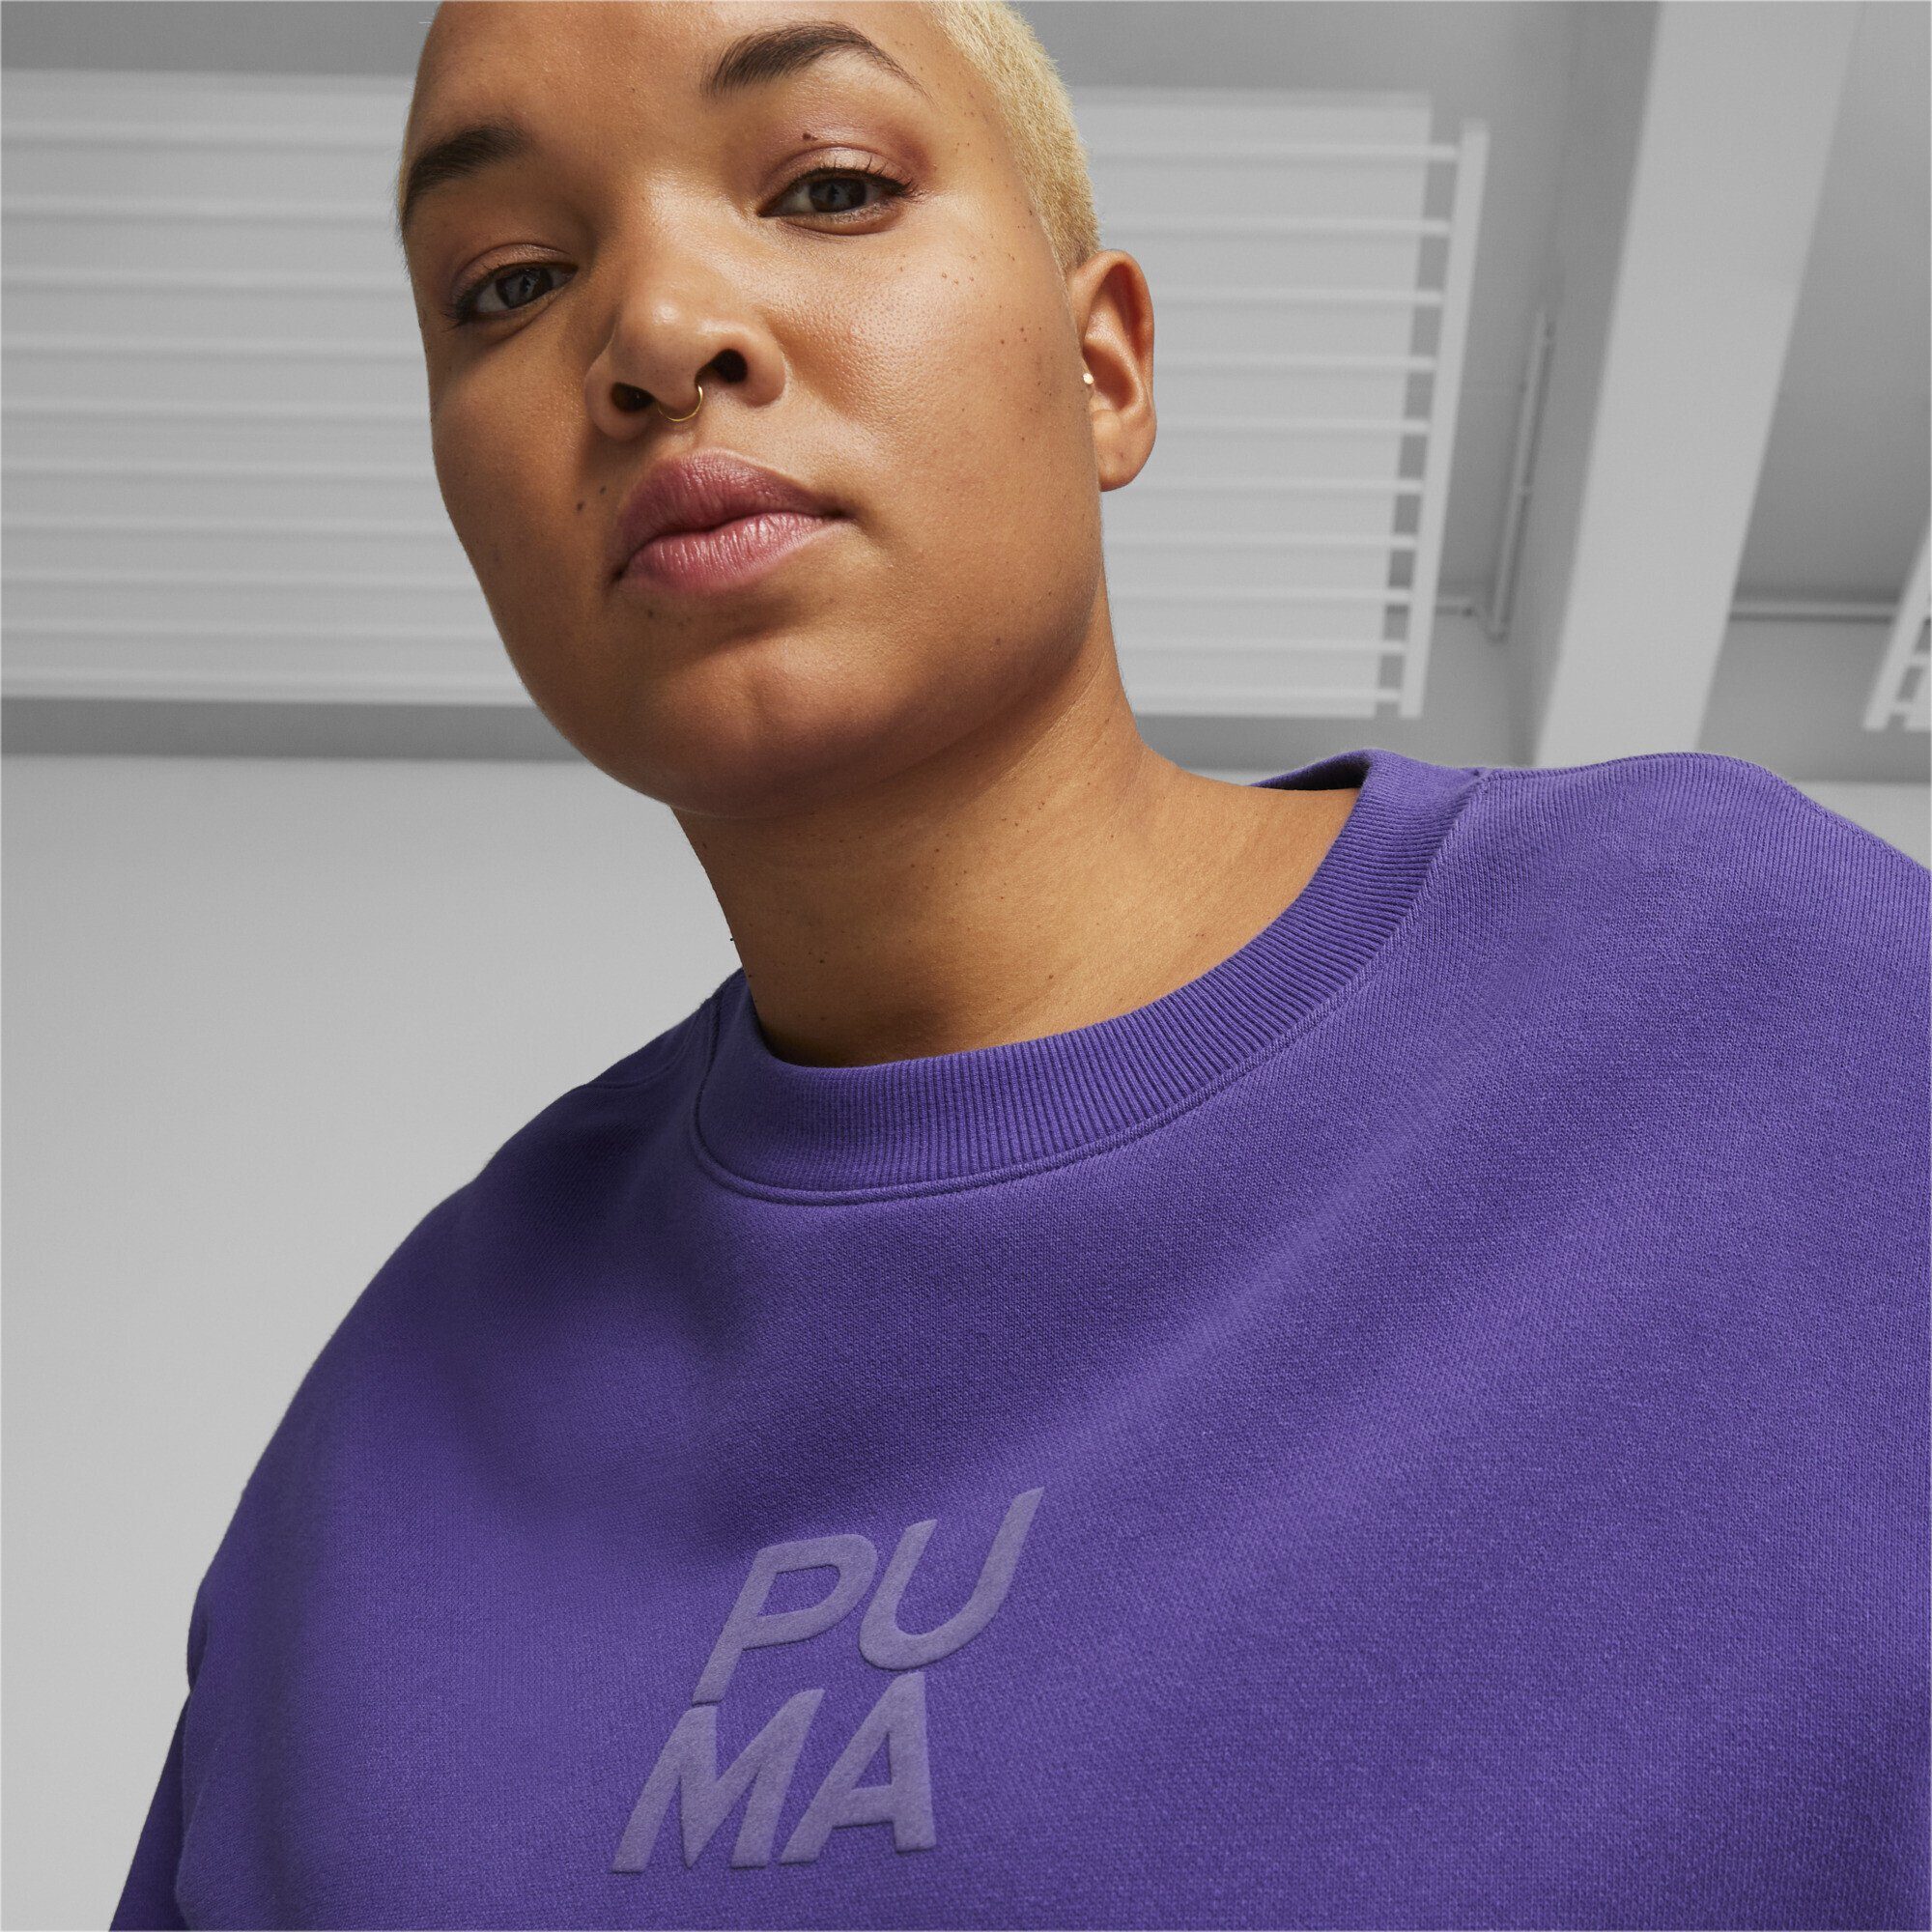 Damen PUMA Purple Sweatshirt Team Sweatshirt Violet Infuse